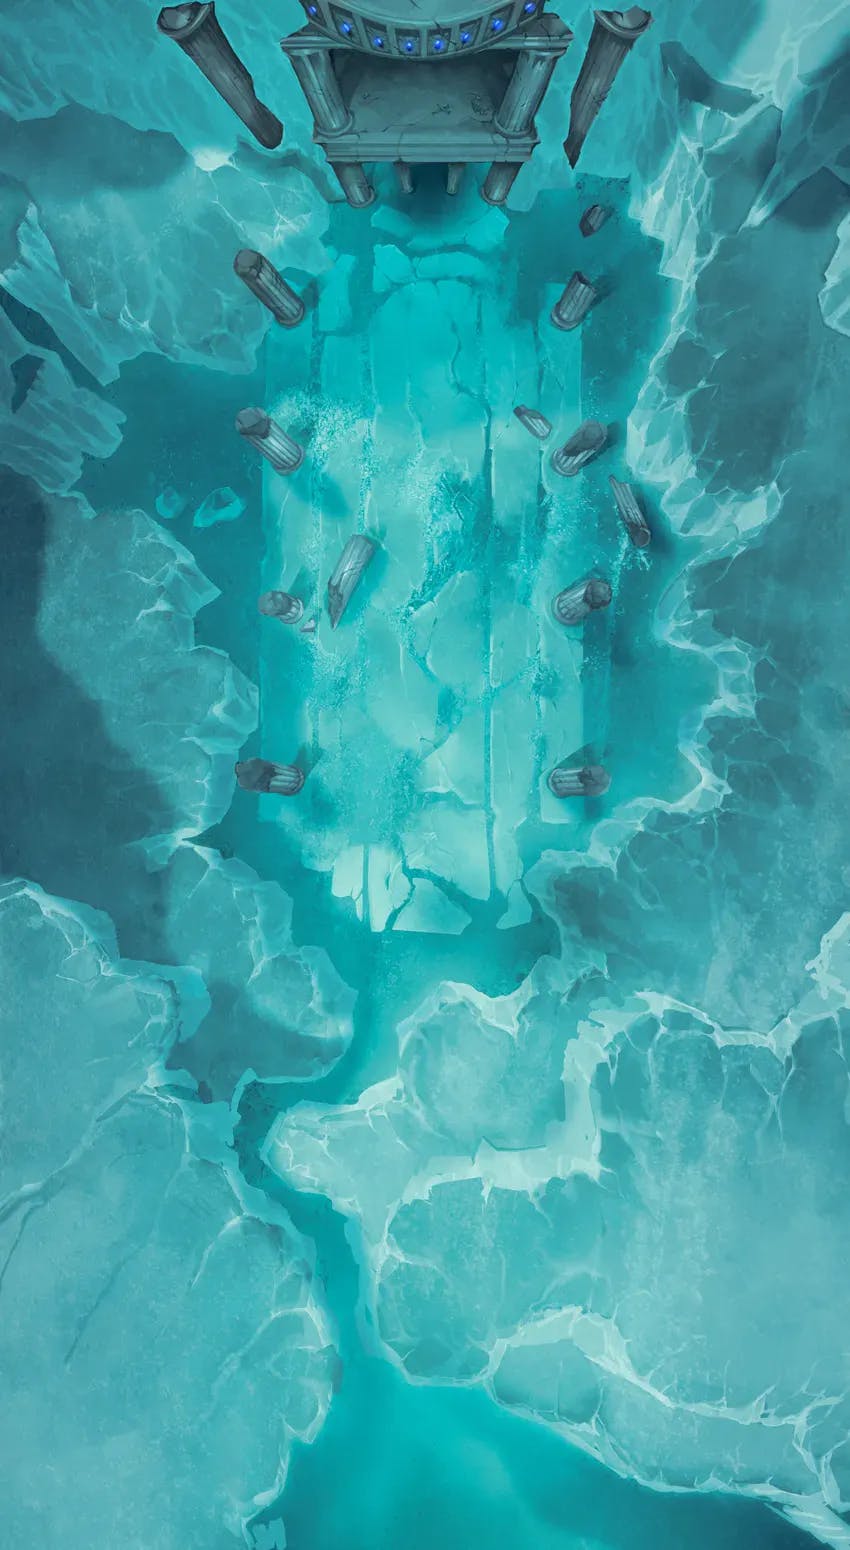 Blue dragon lair, ice temple variant